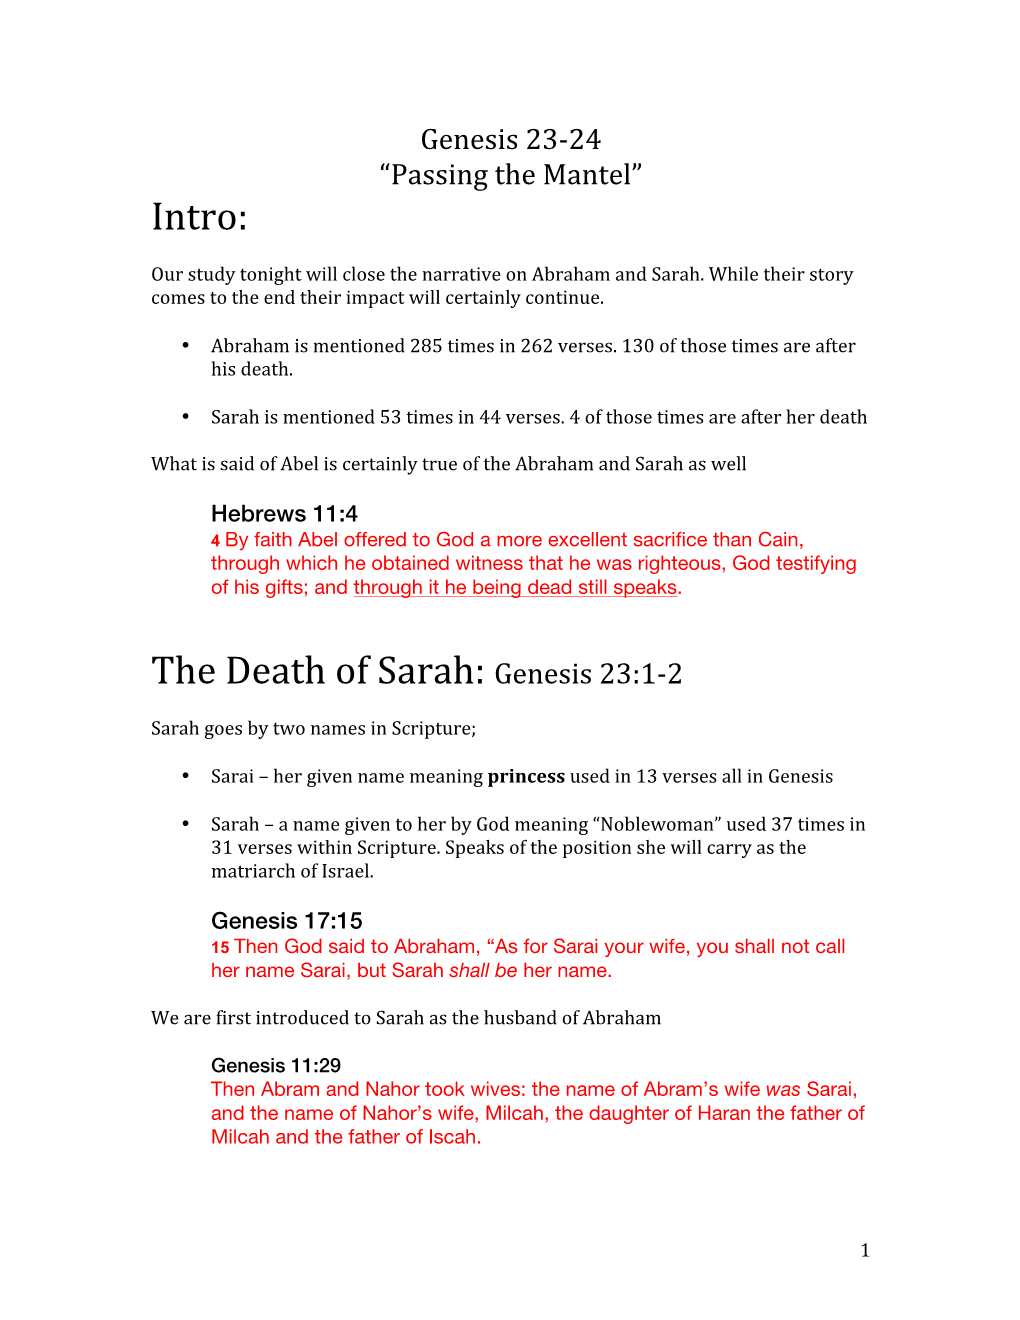 The Death of Sarah: Genesis 23:1-2